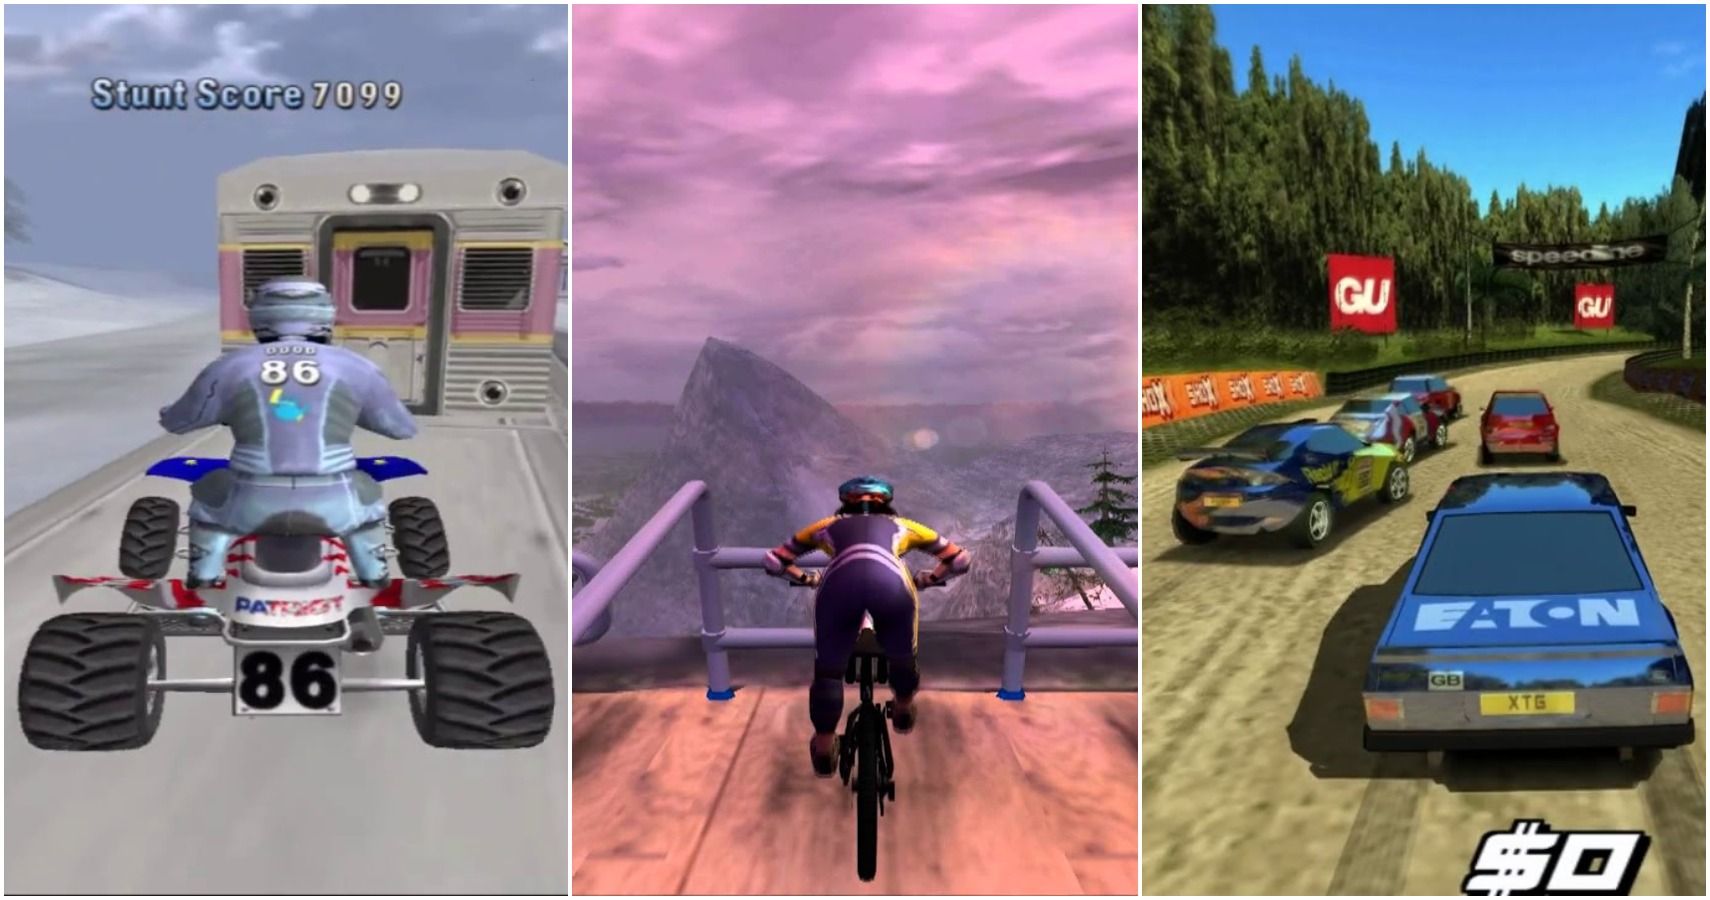 The 10 Best PS2 Racing Games, According To Metacritic